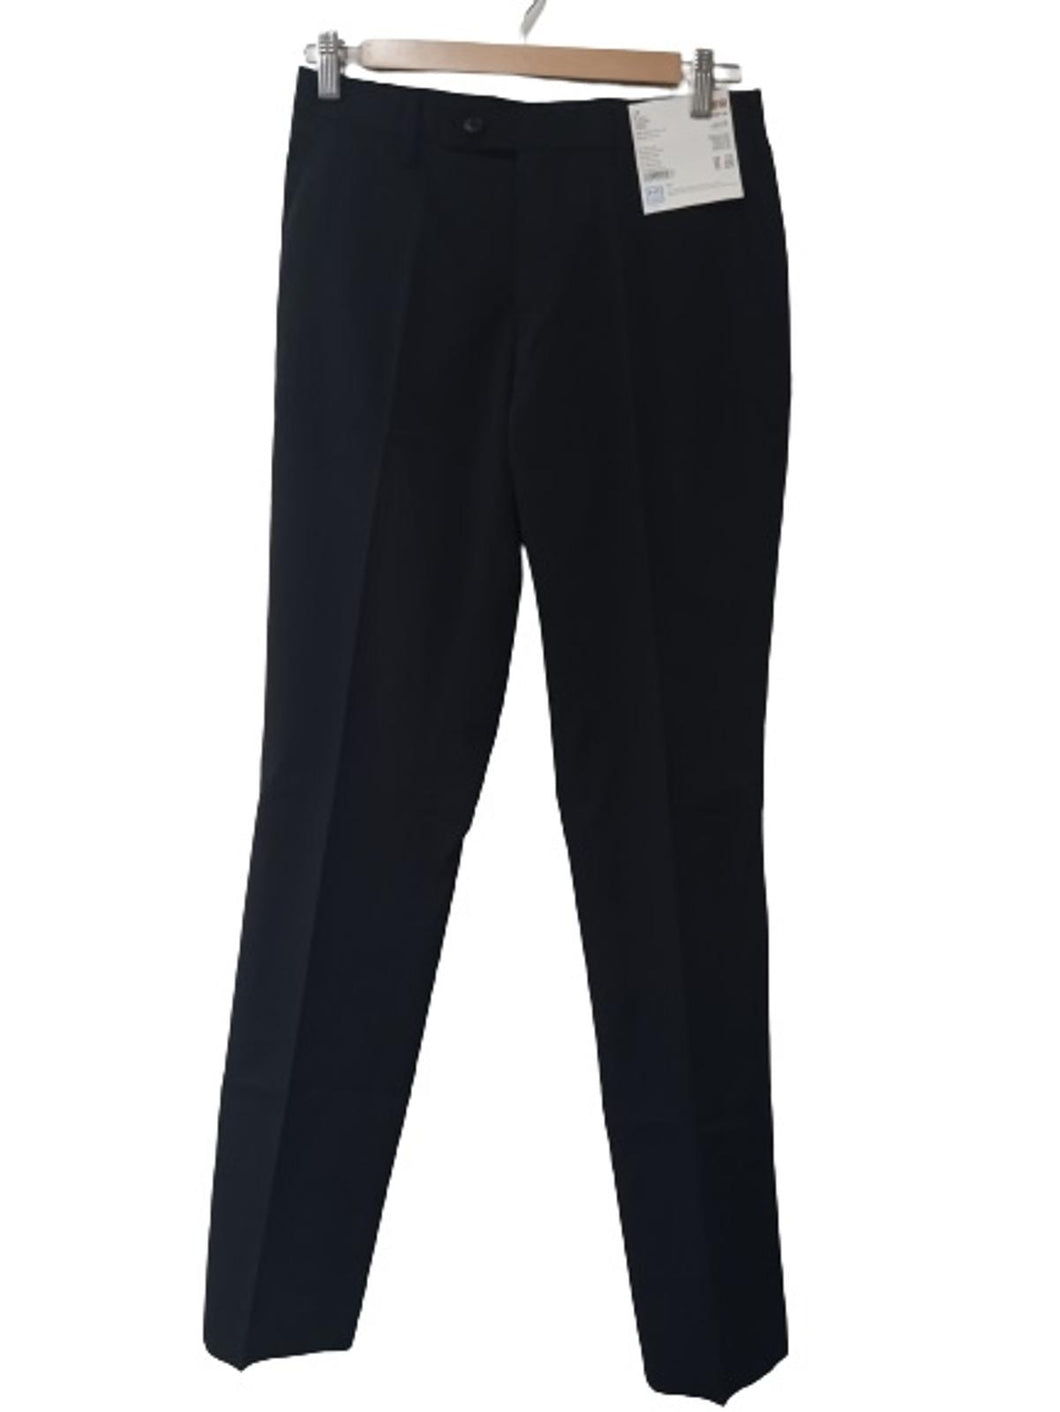 UNIQLO Men's Black Zip Fly Ultra Light Kando Trousers Size UK W29L34 NEW